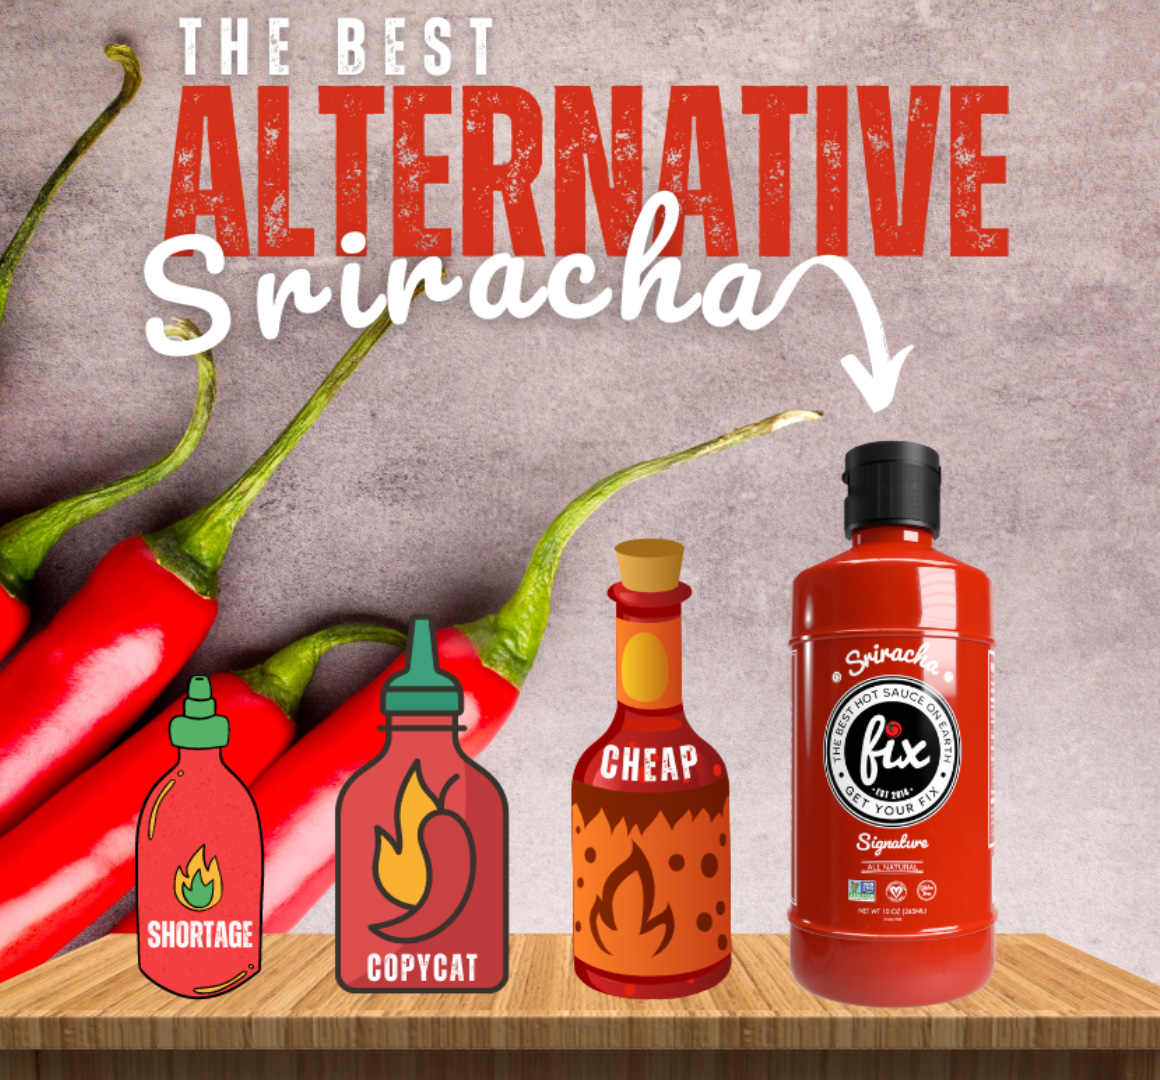 Fix is the All-Natural alternative Sriracha.